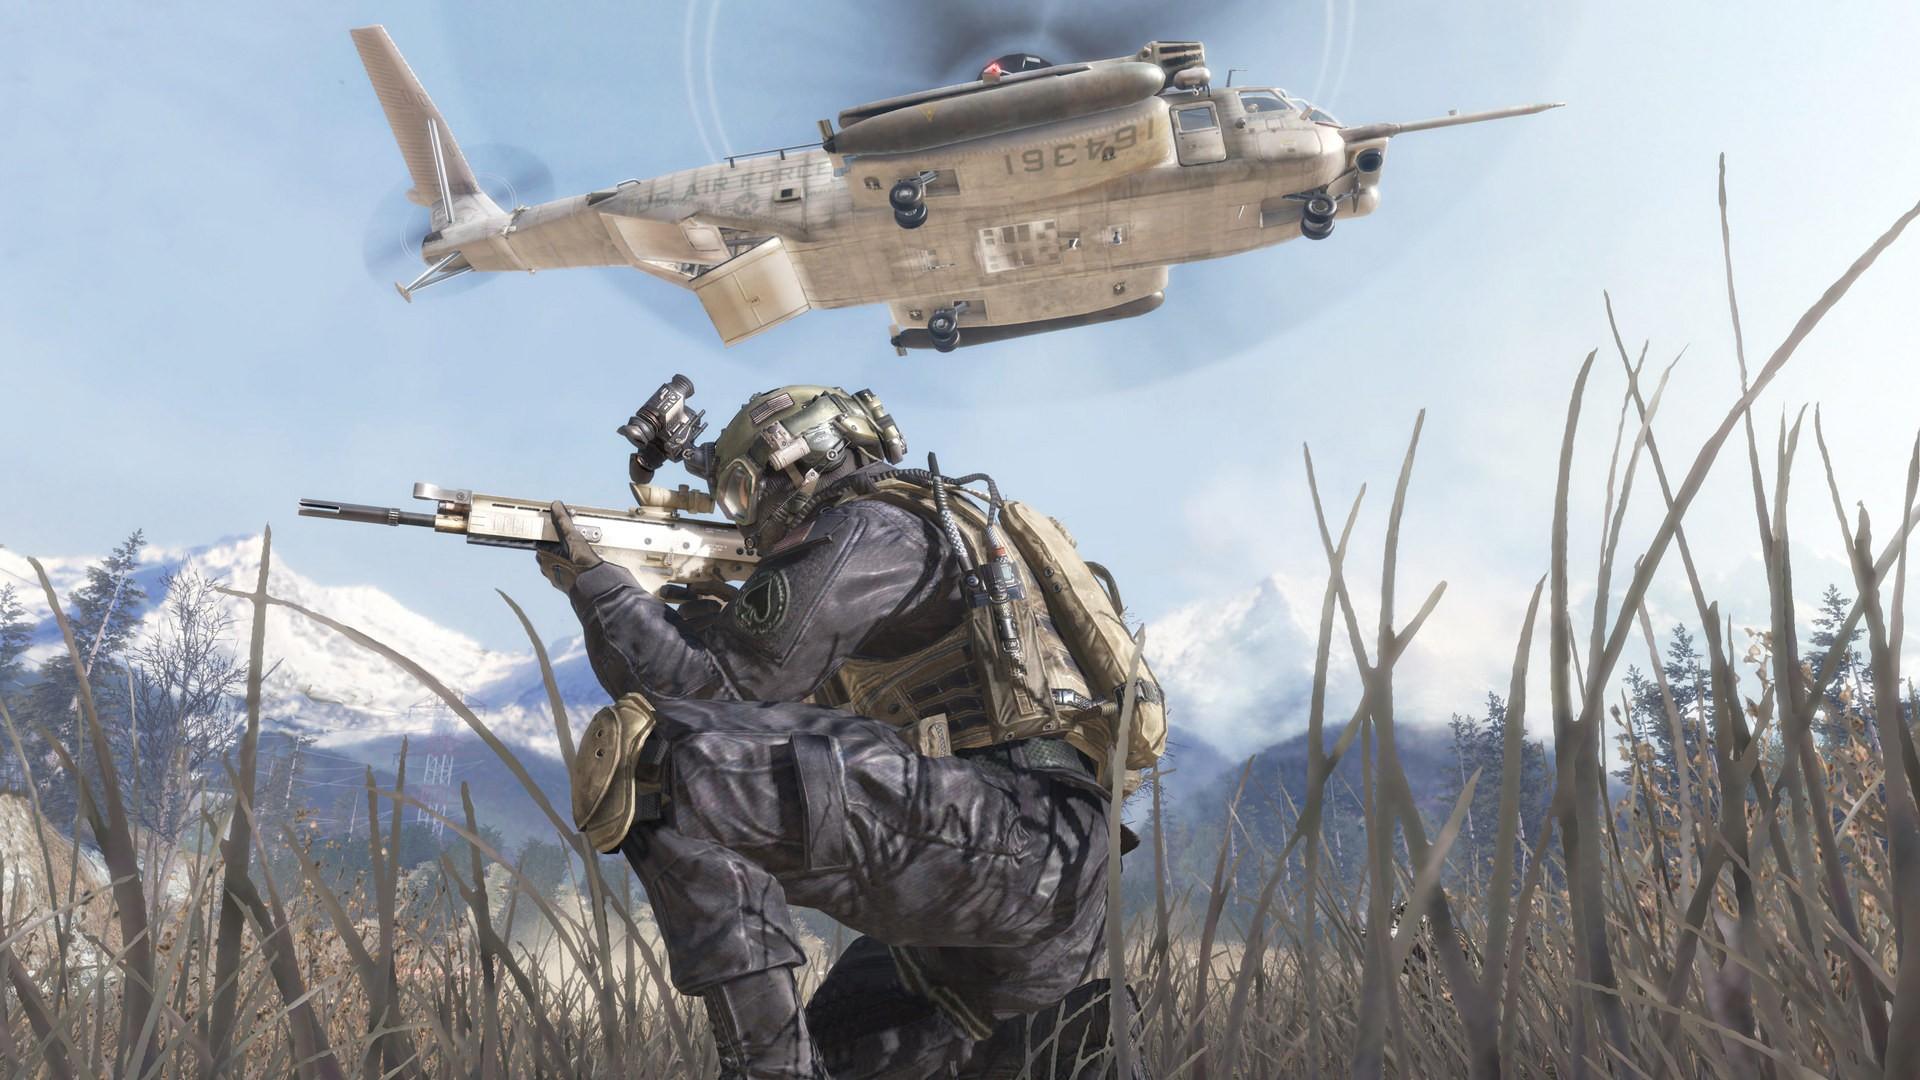 Photo Call of Duty Call of Duty 4: Modern Warfare Games Aviation